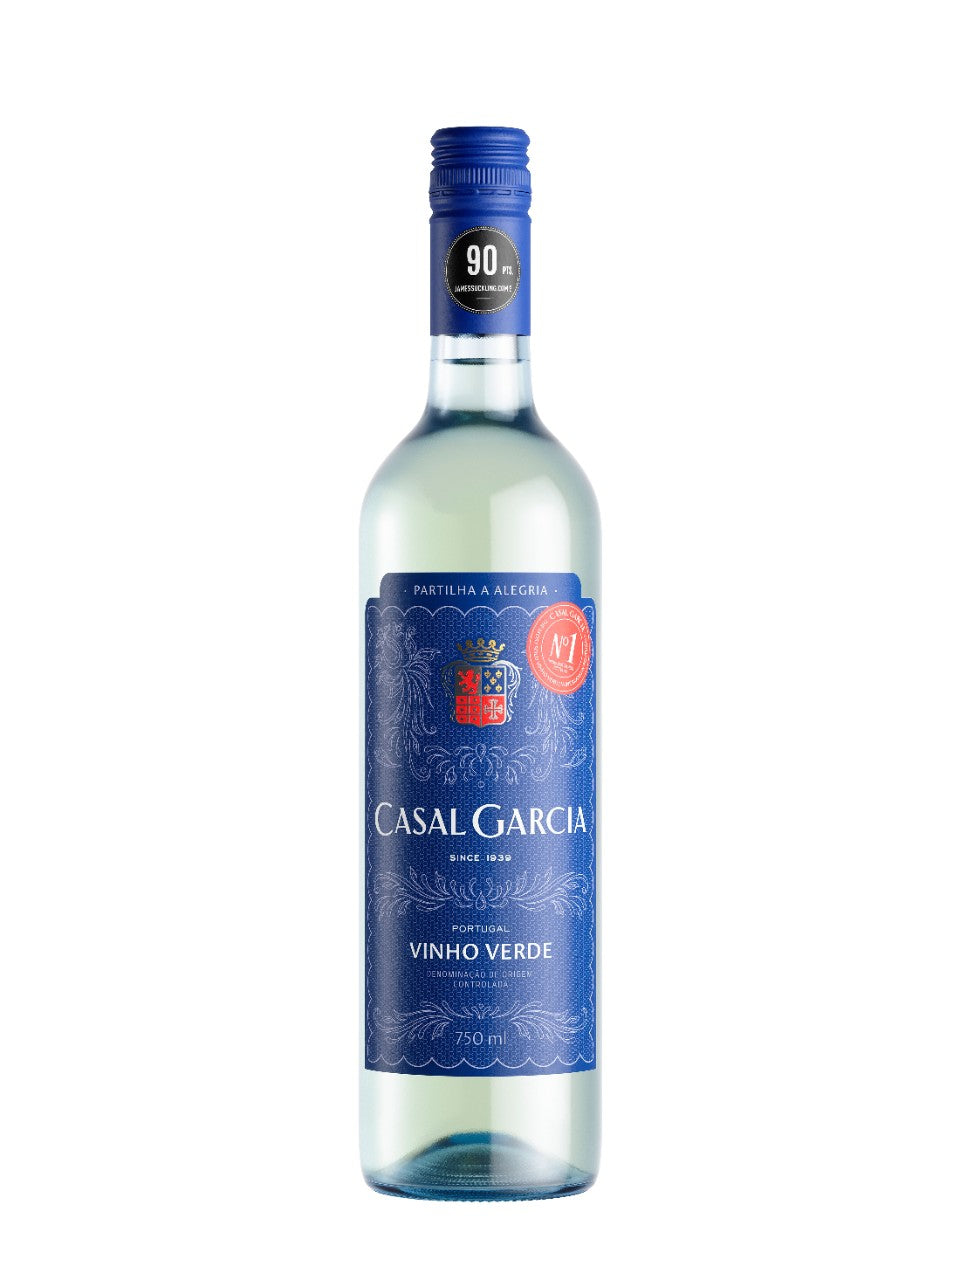 Casal Garcia Vinho Verde DO Loureiro 750 mL bottle